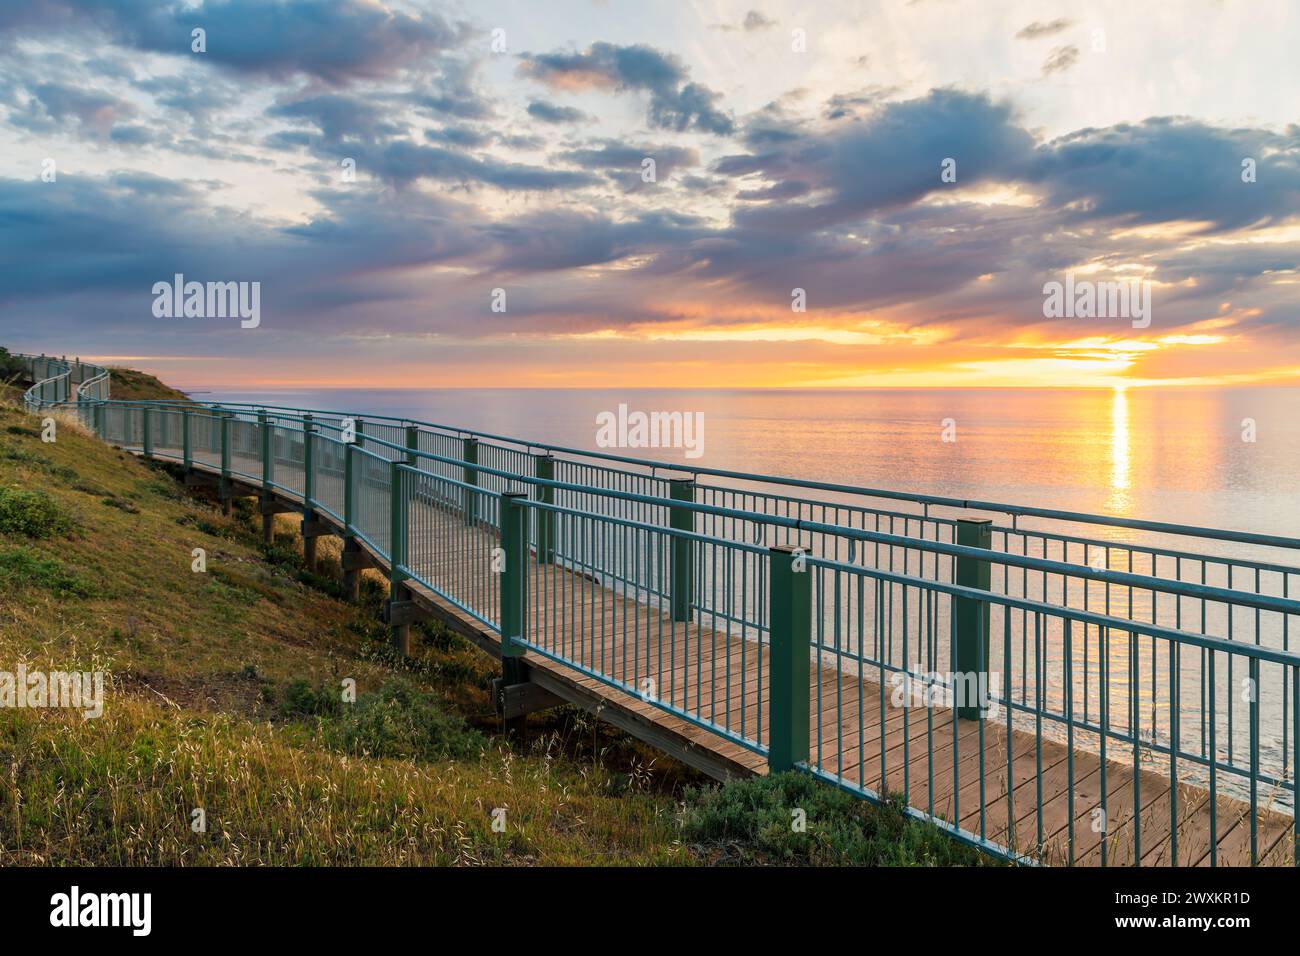 Hallett Cove neue Küstenpromenade mit Meerblick bei Sonnenuntergang, South Australia Stockfoto